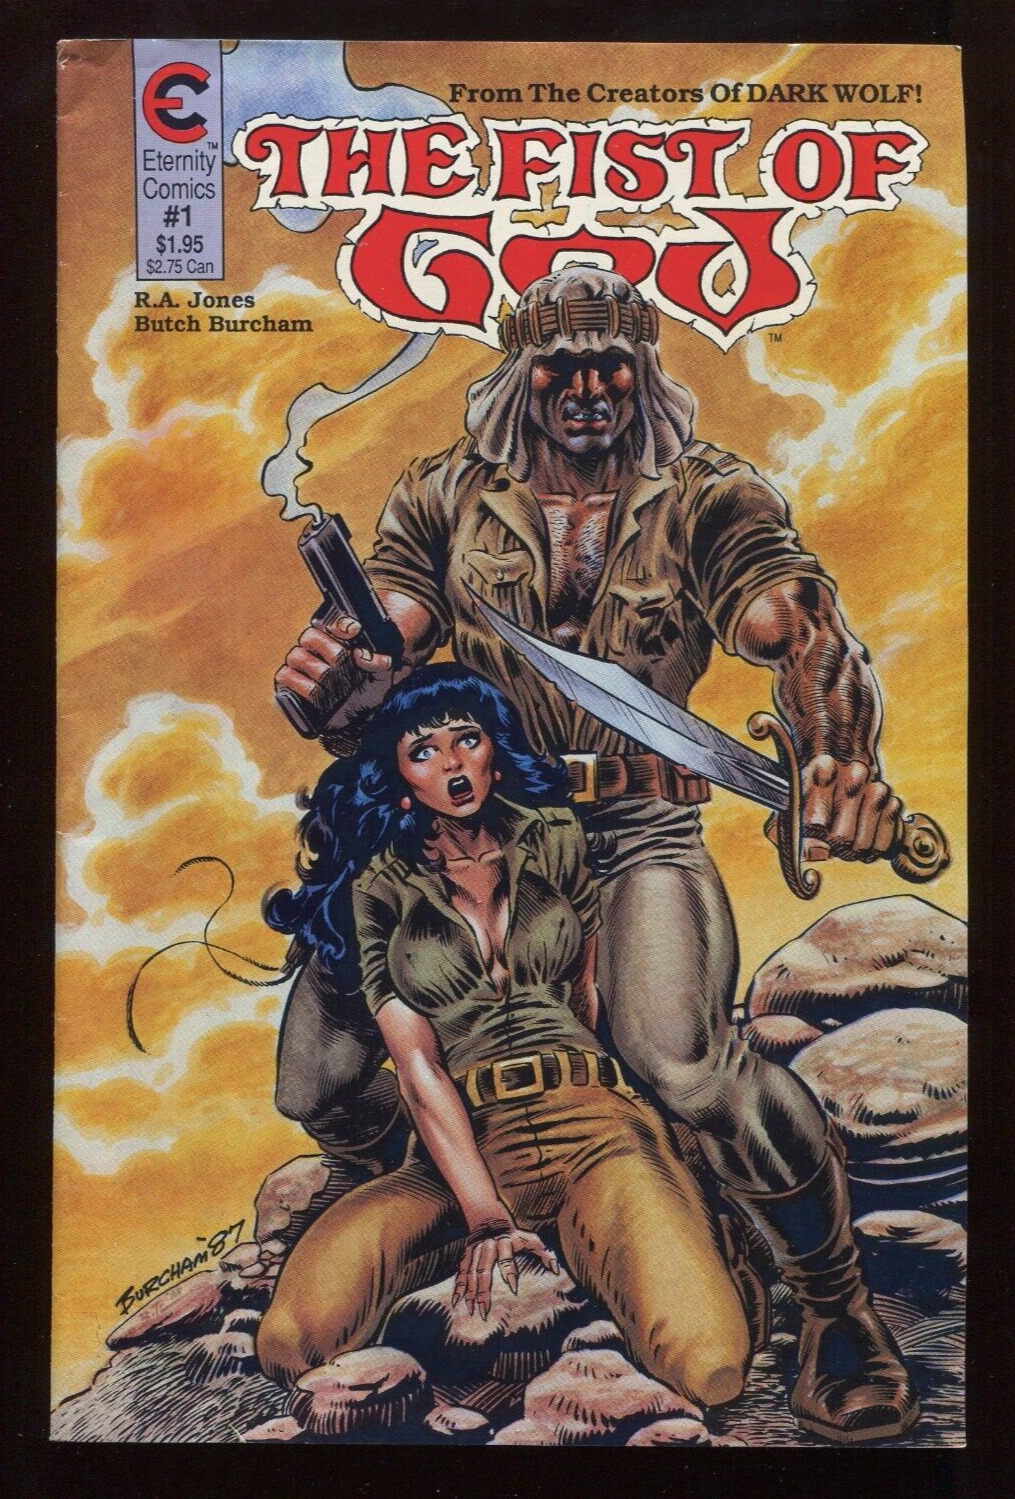 Fist of God #1 Eternity Comics May 1988 R.A. Jones Butch Burcham